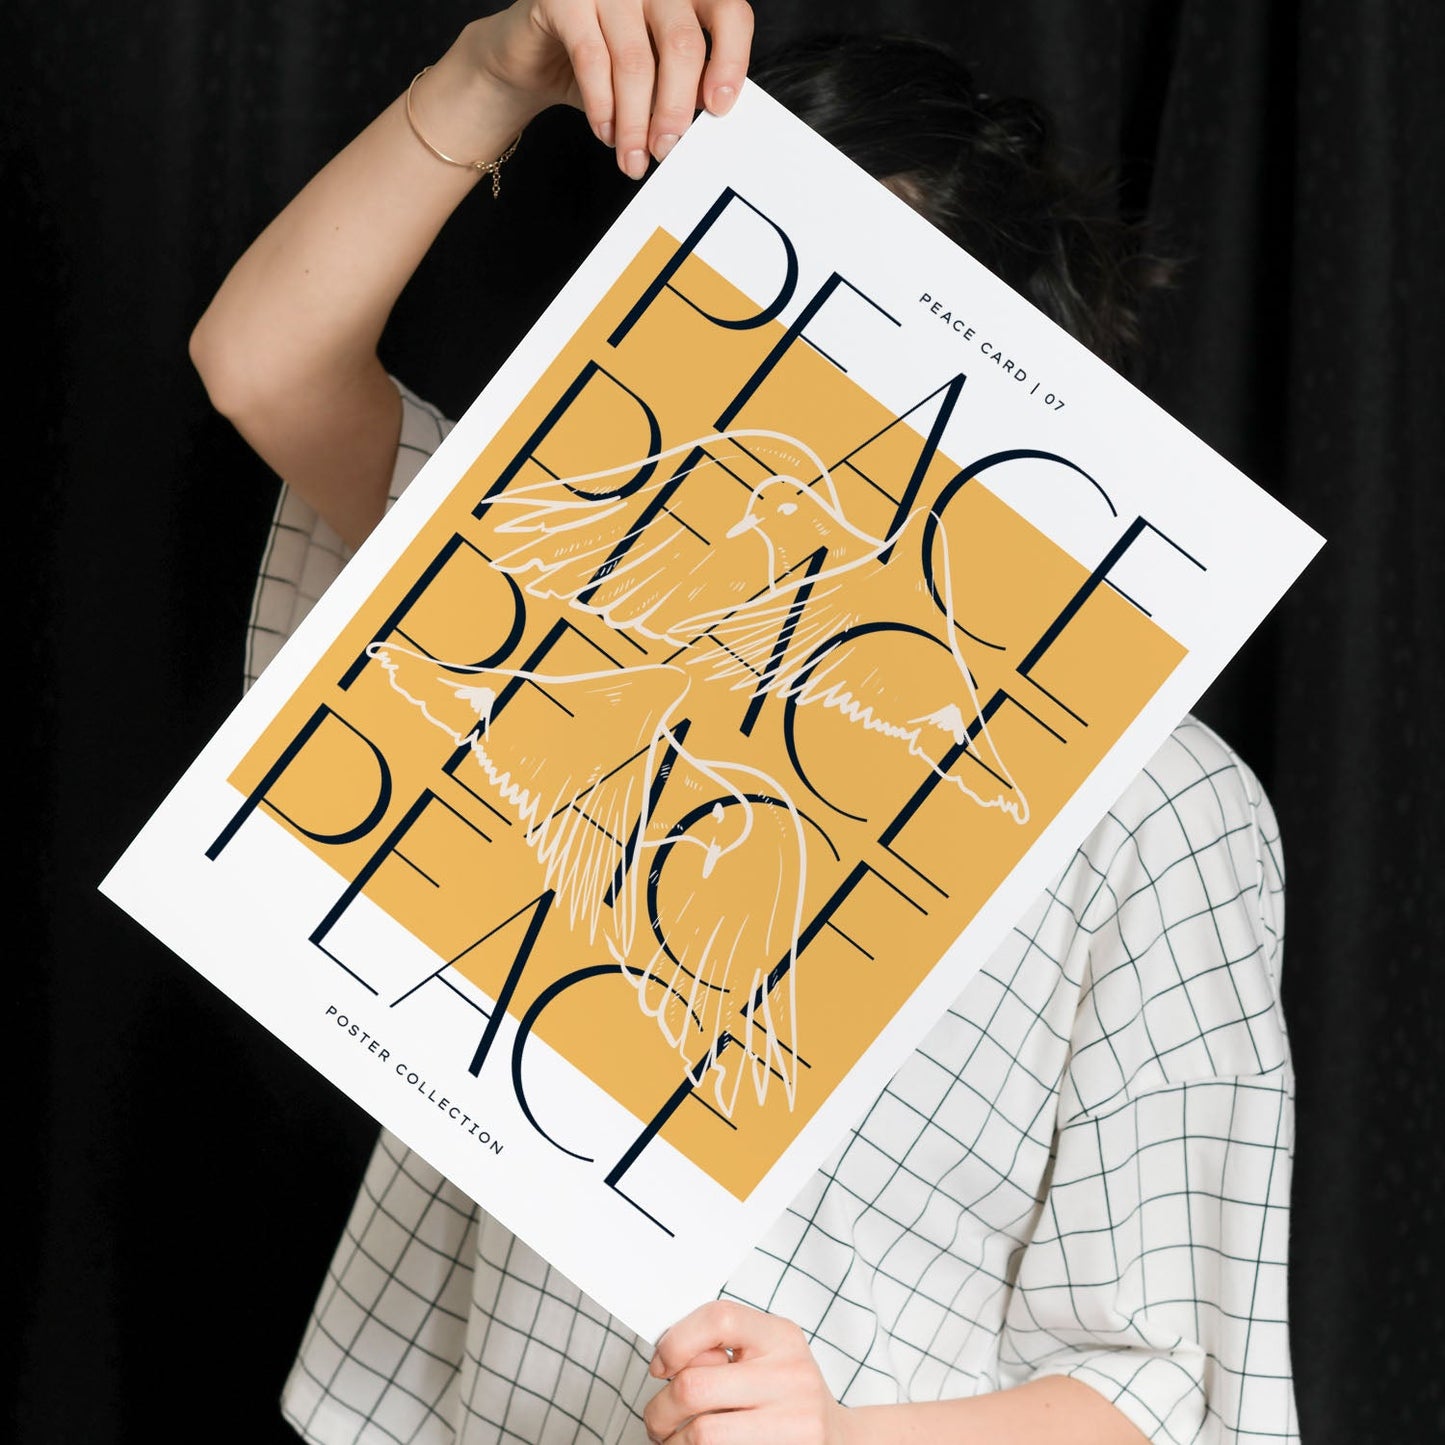 Peace on us-Artwork-Nacnic-Nacnic Estudio SL